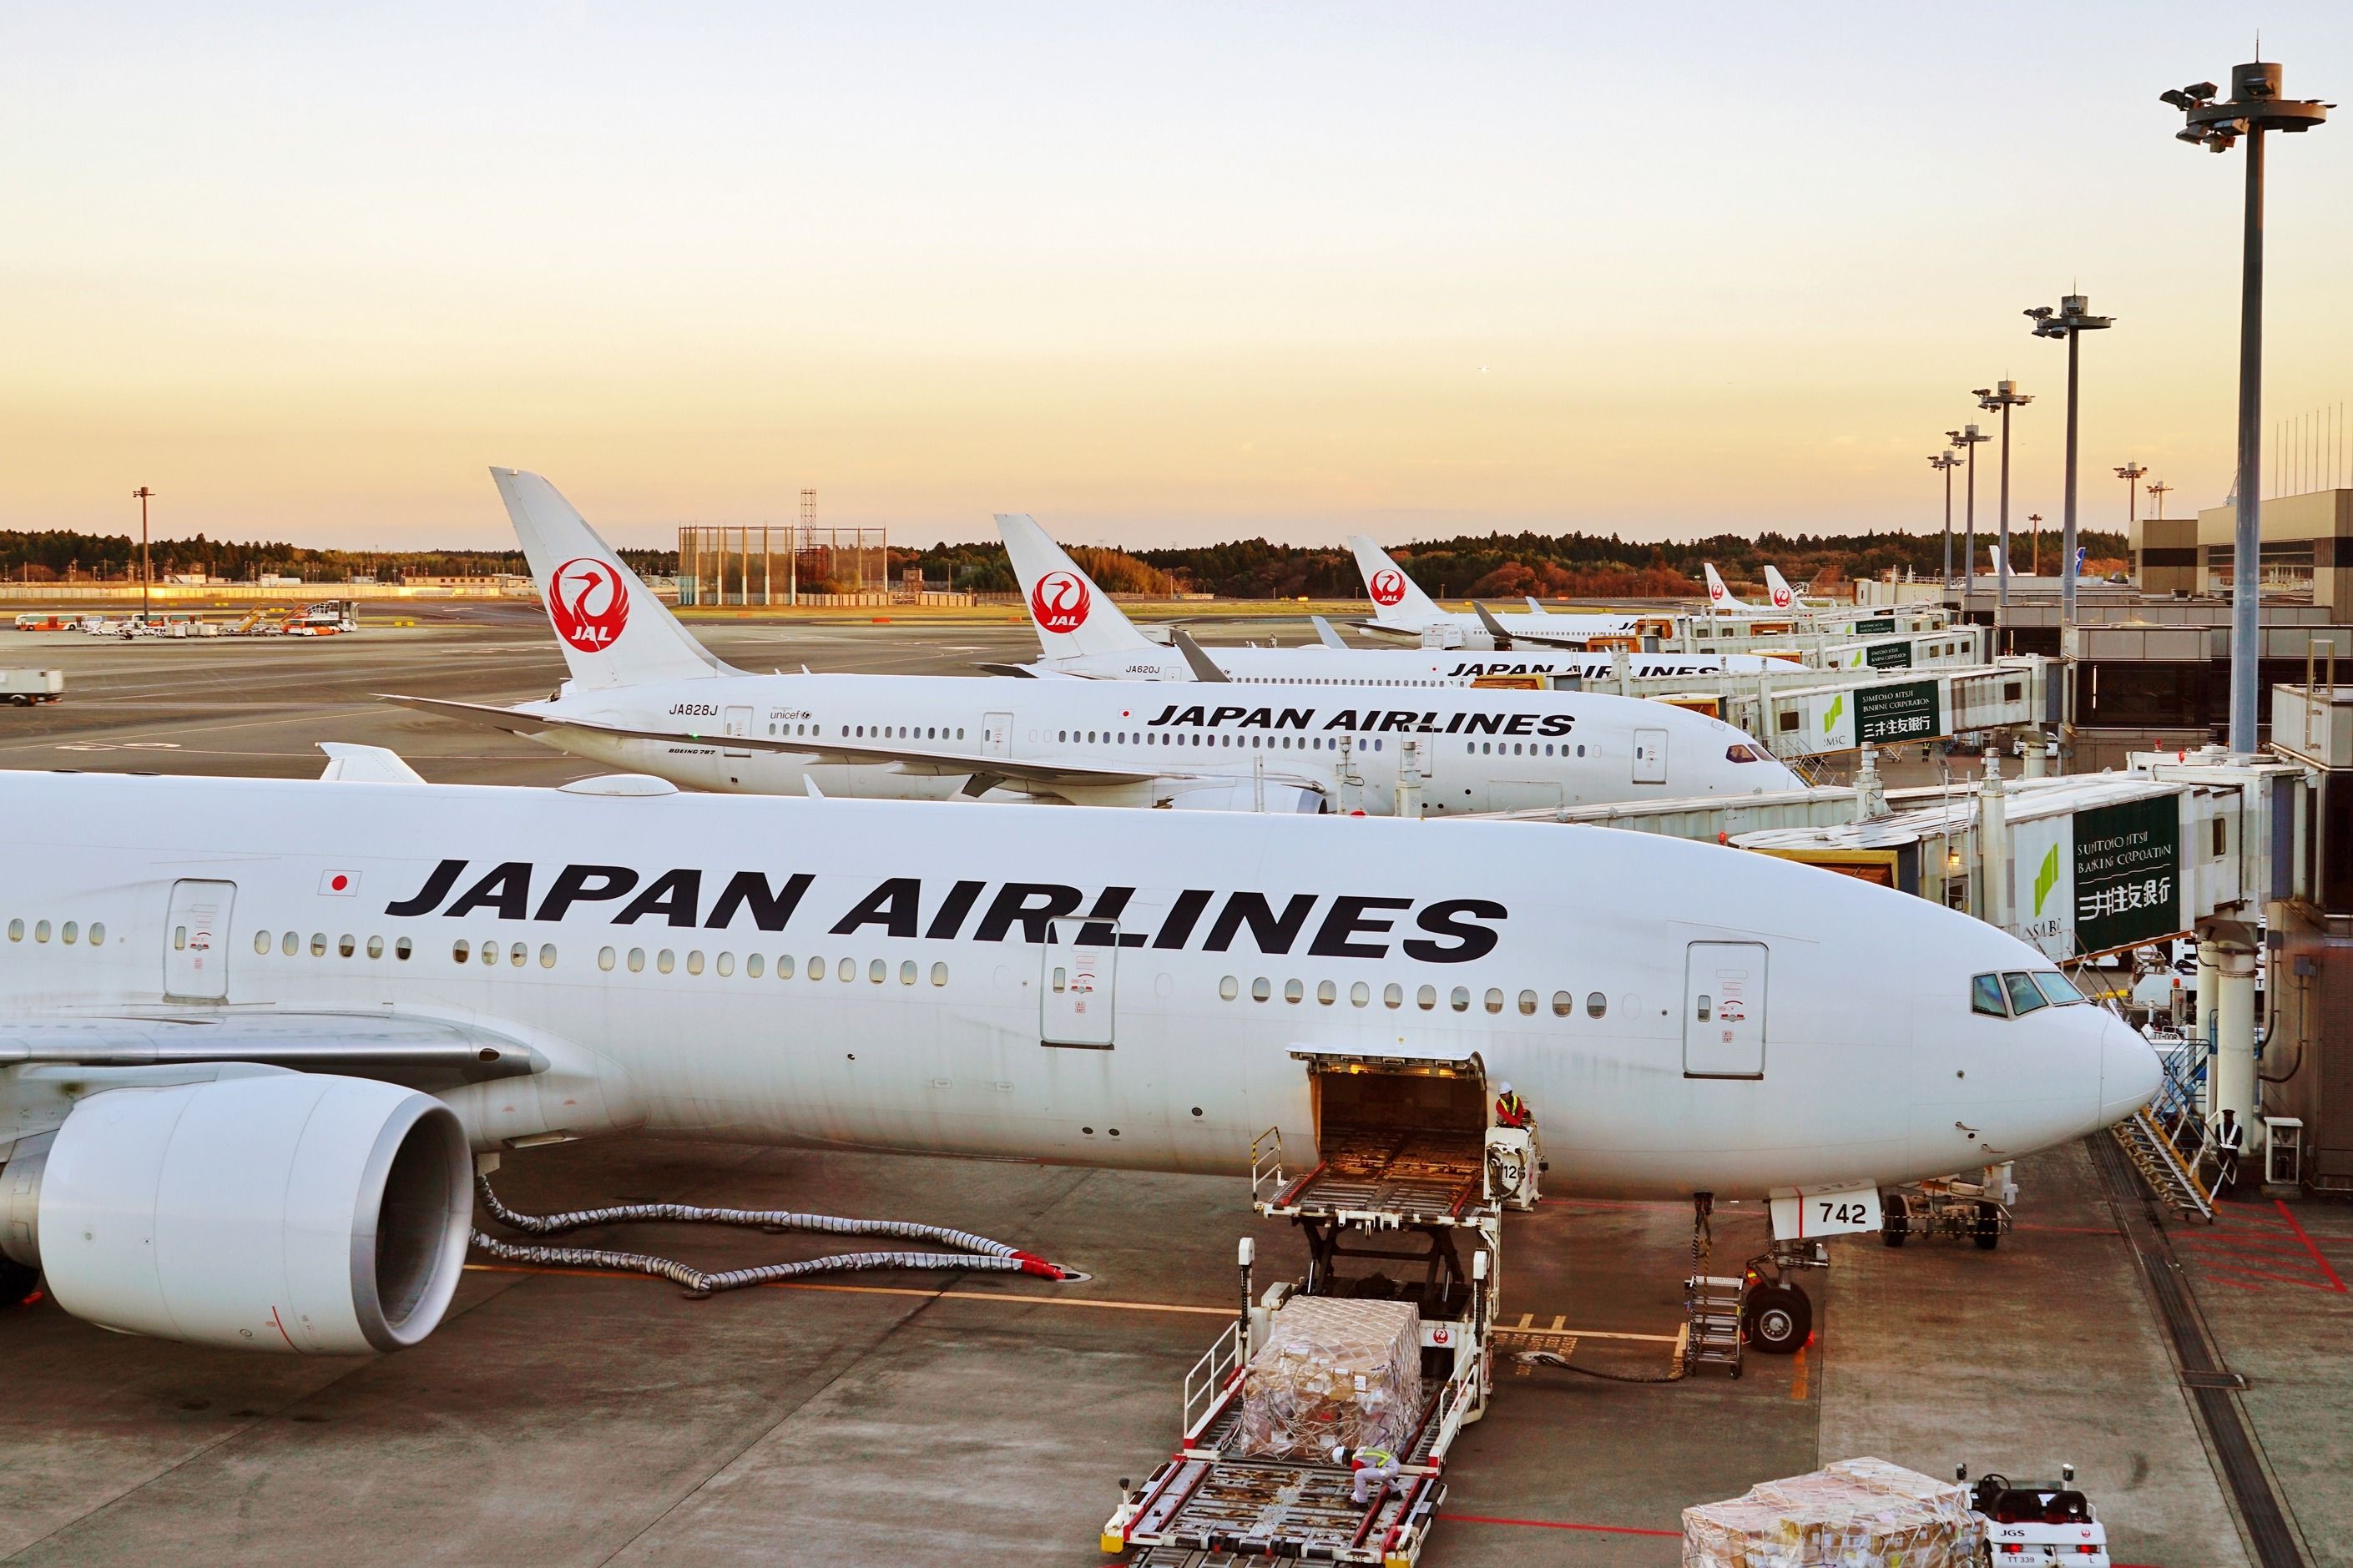 Japan Airlines aircraft at the gates